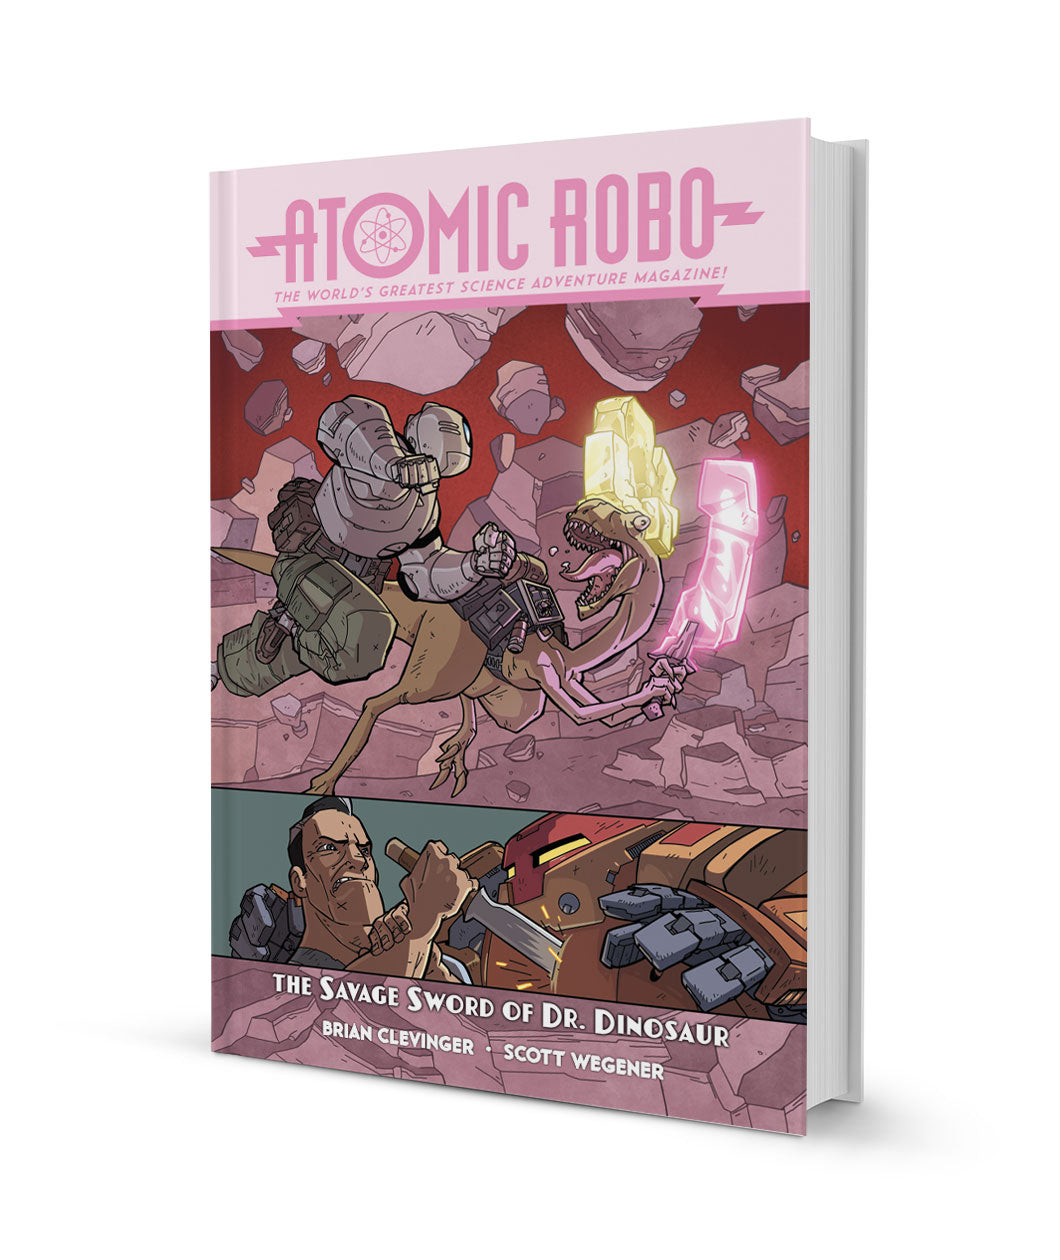 Atomic Robo and the Savage Sword of Dr. Dinosaur